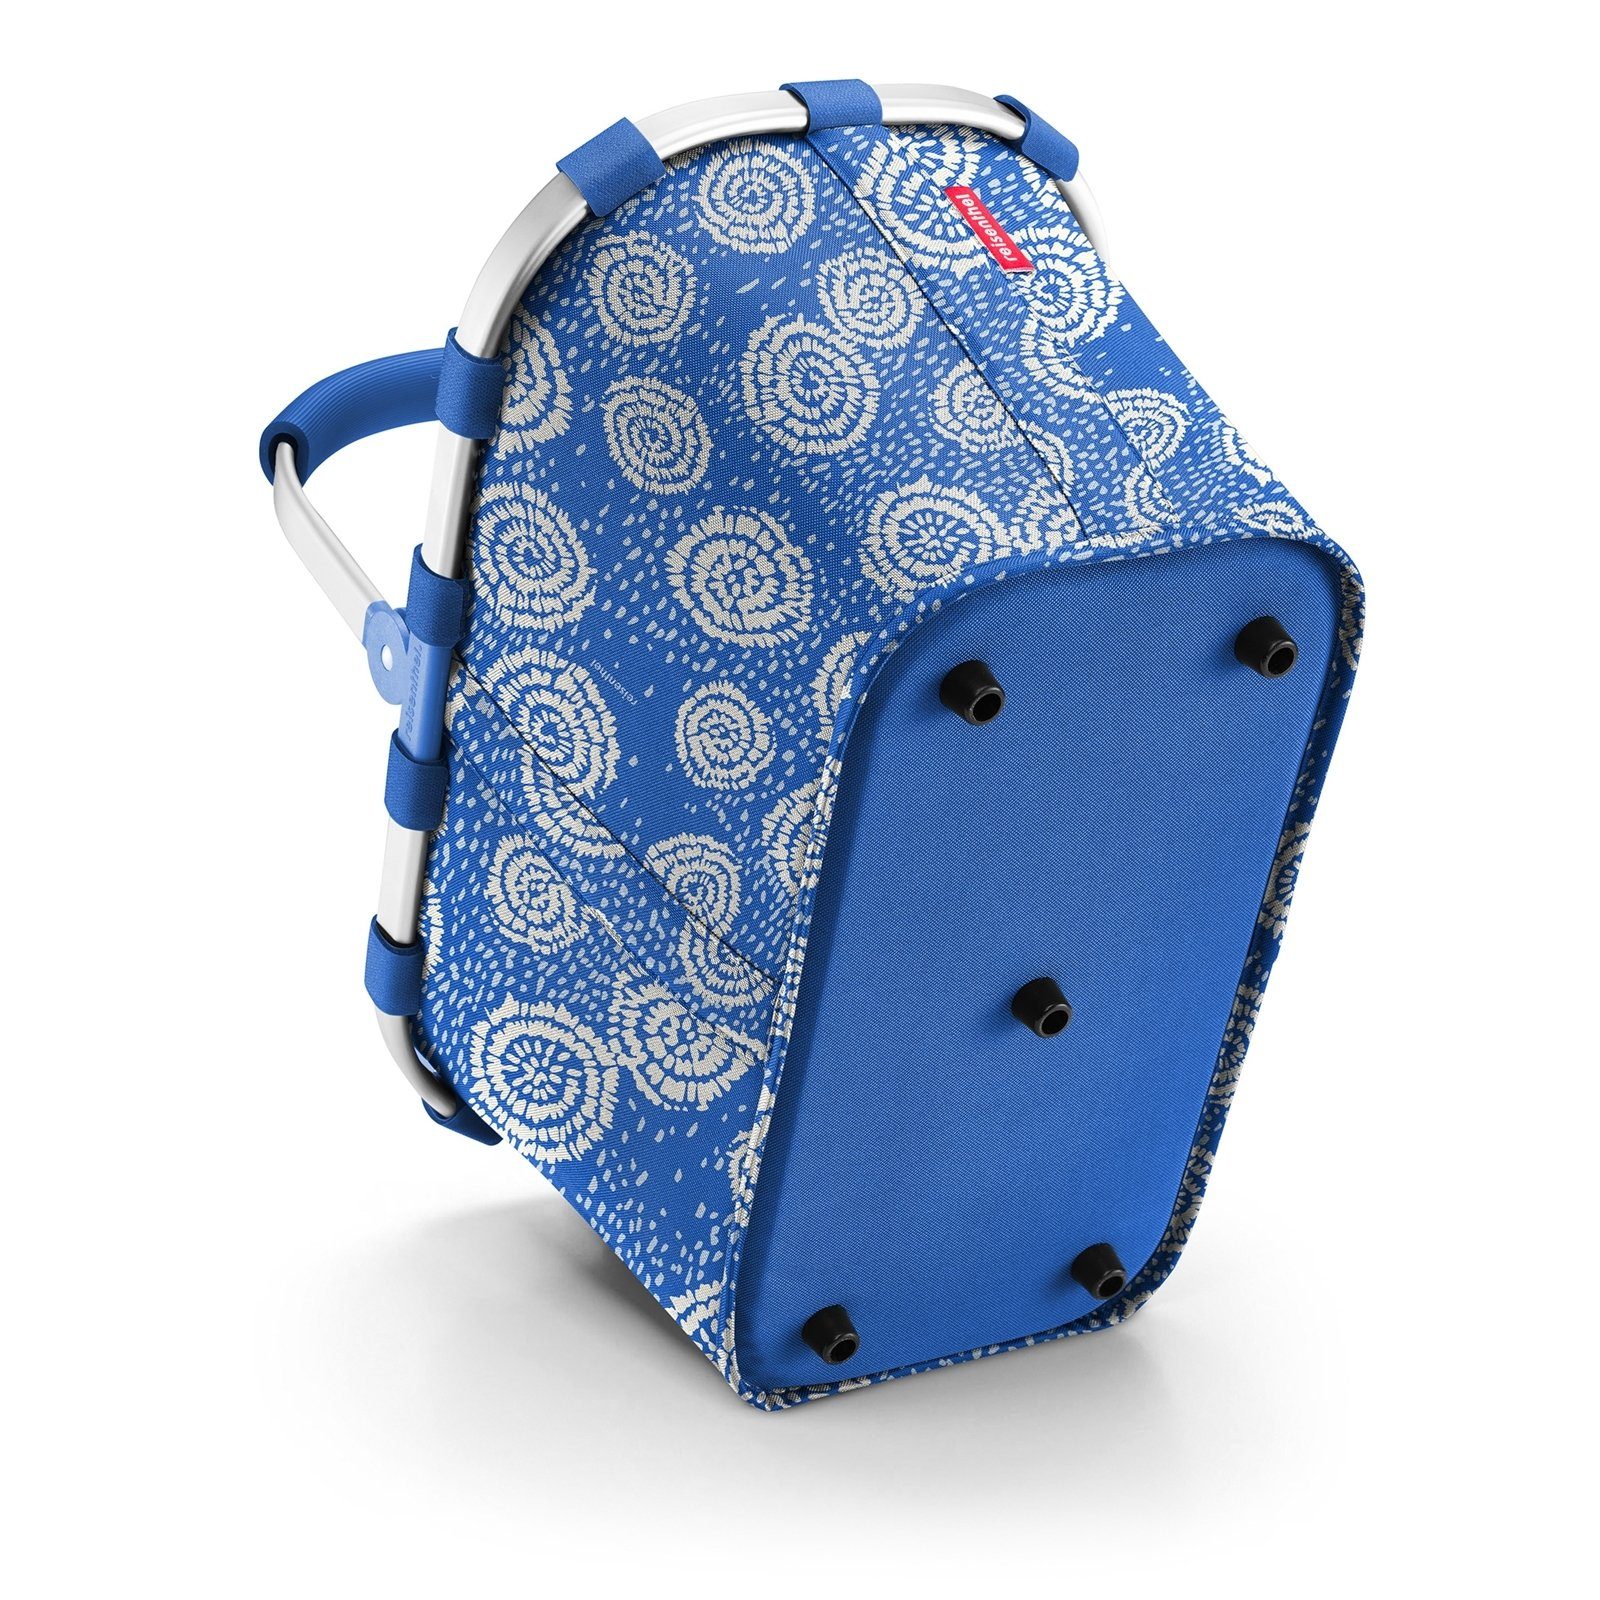 REISENTHEL® Einkaufskorb Carrybag, Einkaufskorb strong Shopping, 22 blue batik l